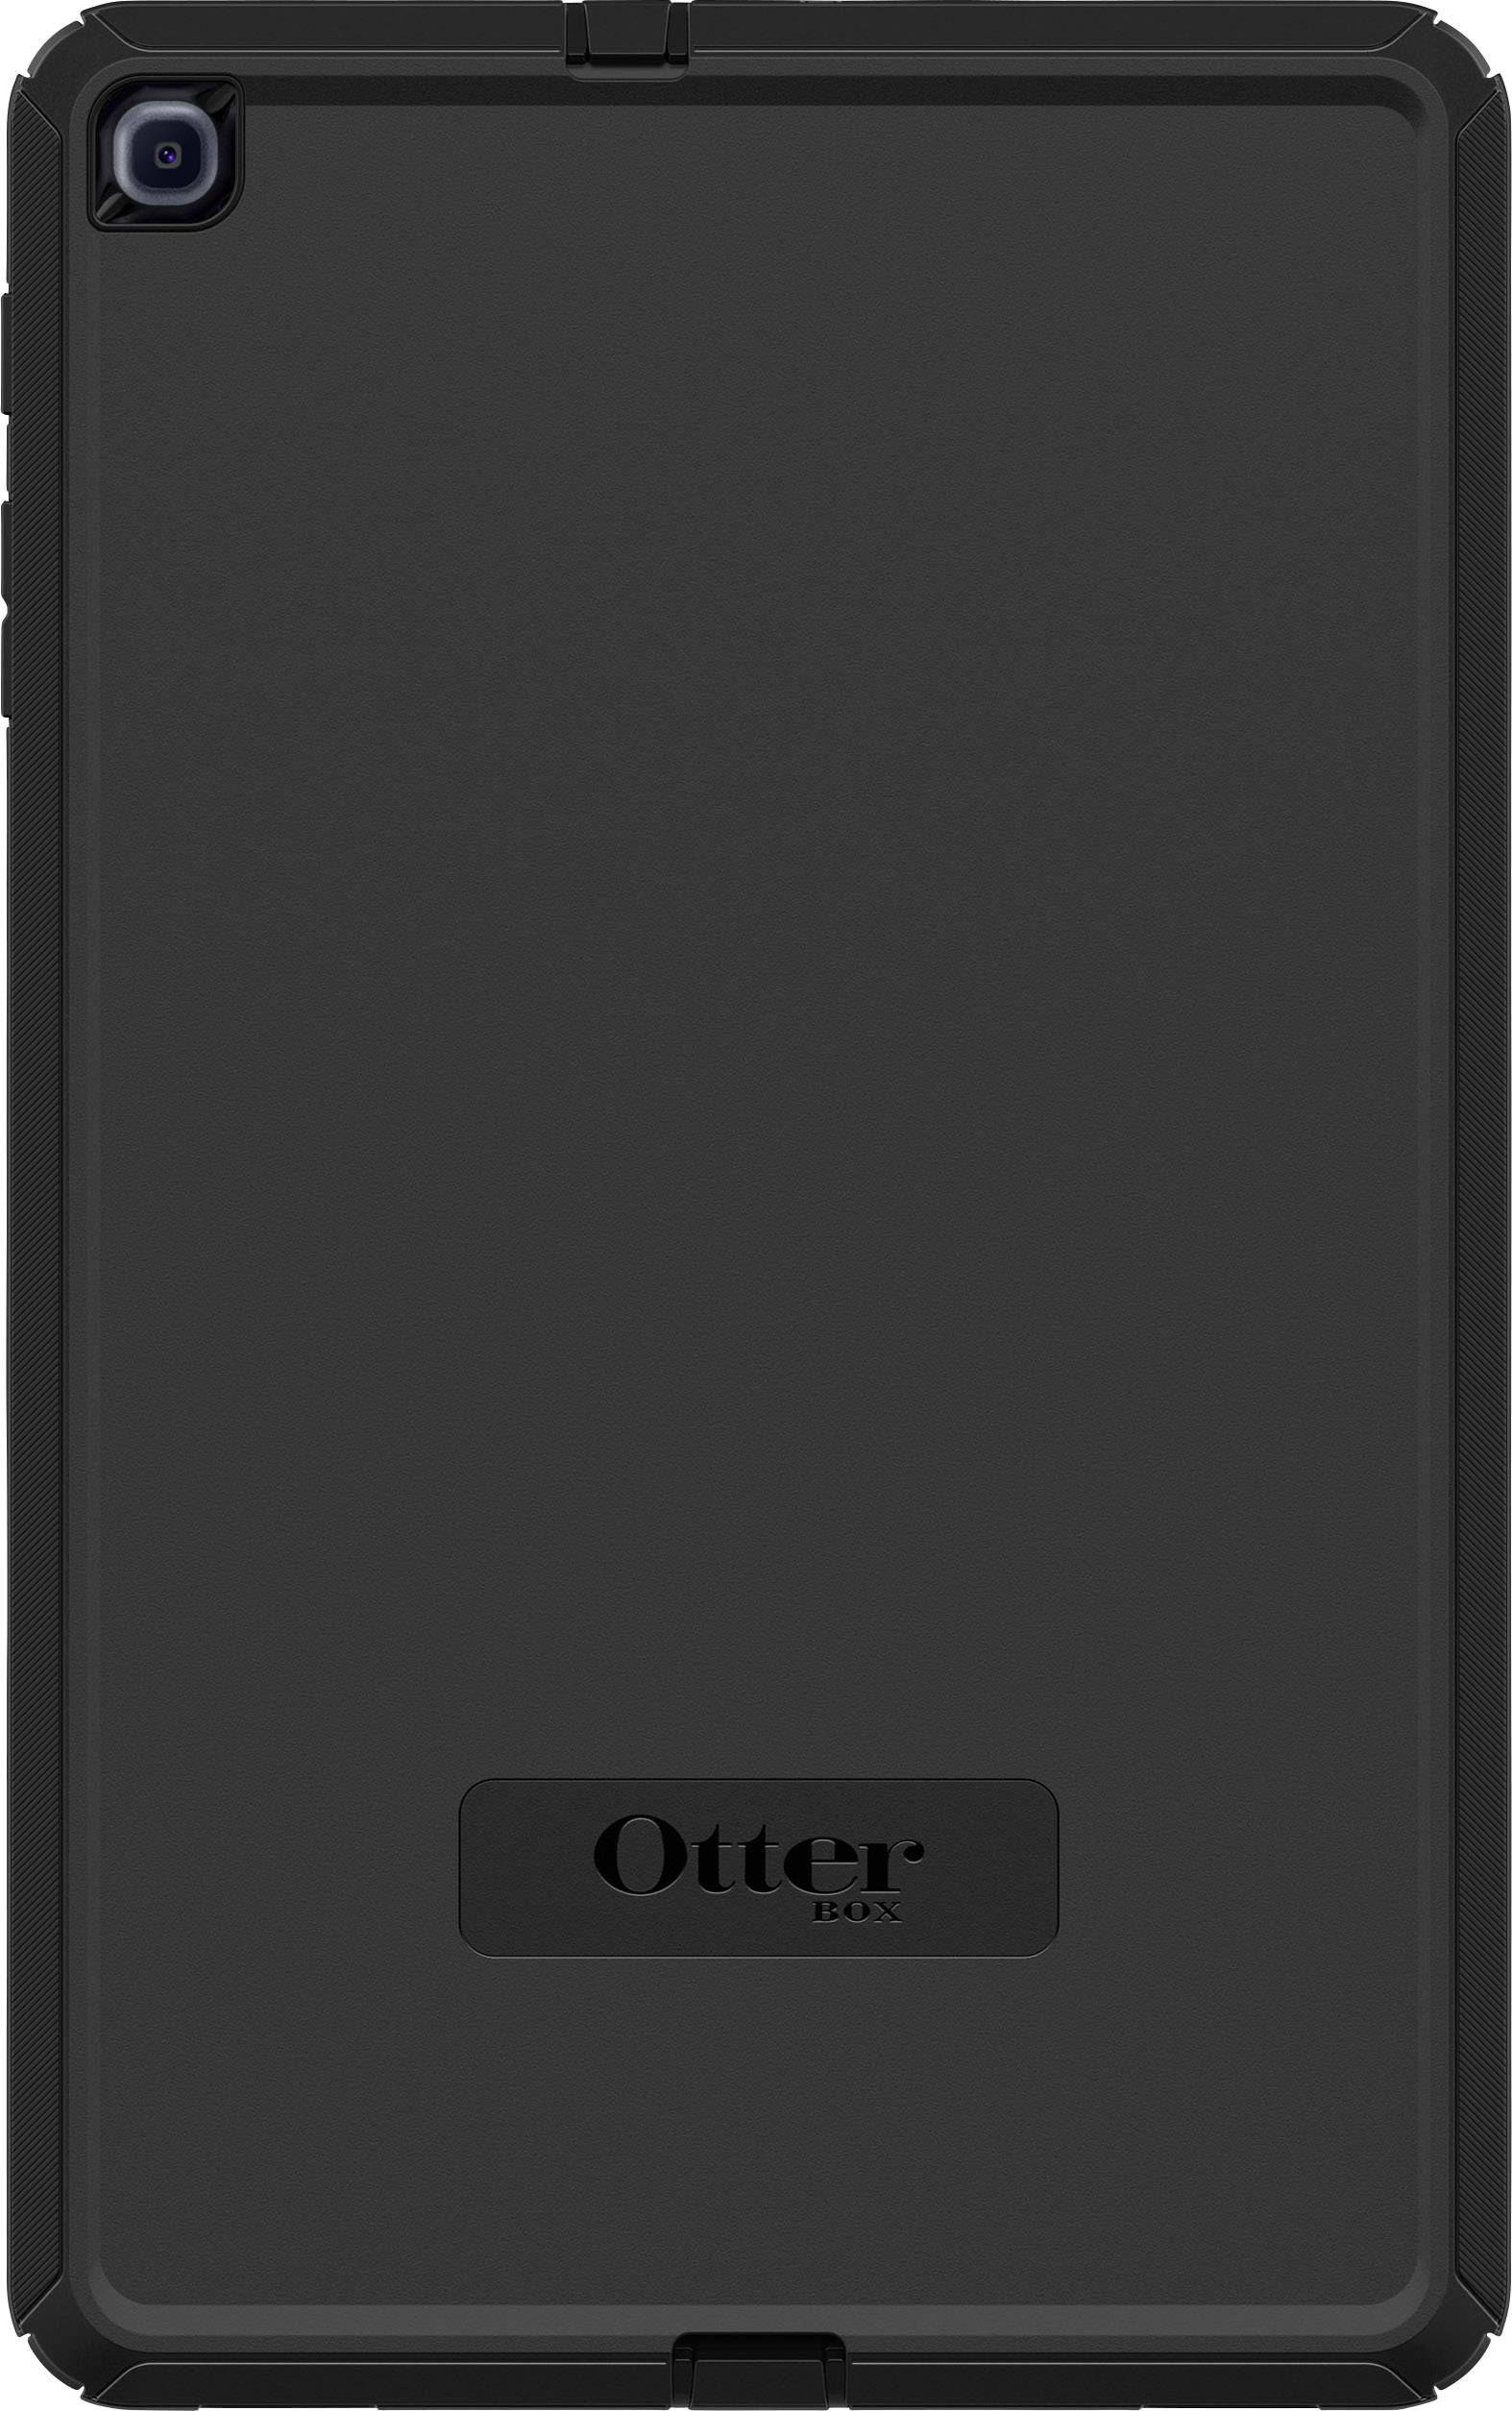 Otterbox Defender Backcover Samsung Tab 10.1 (2019) Tablet PC bag (brand-specific) | Conrad.com